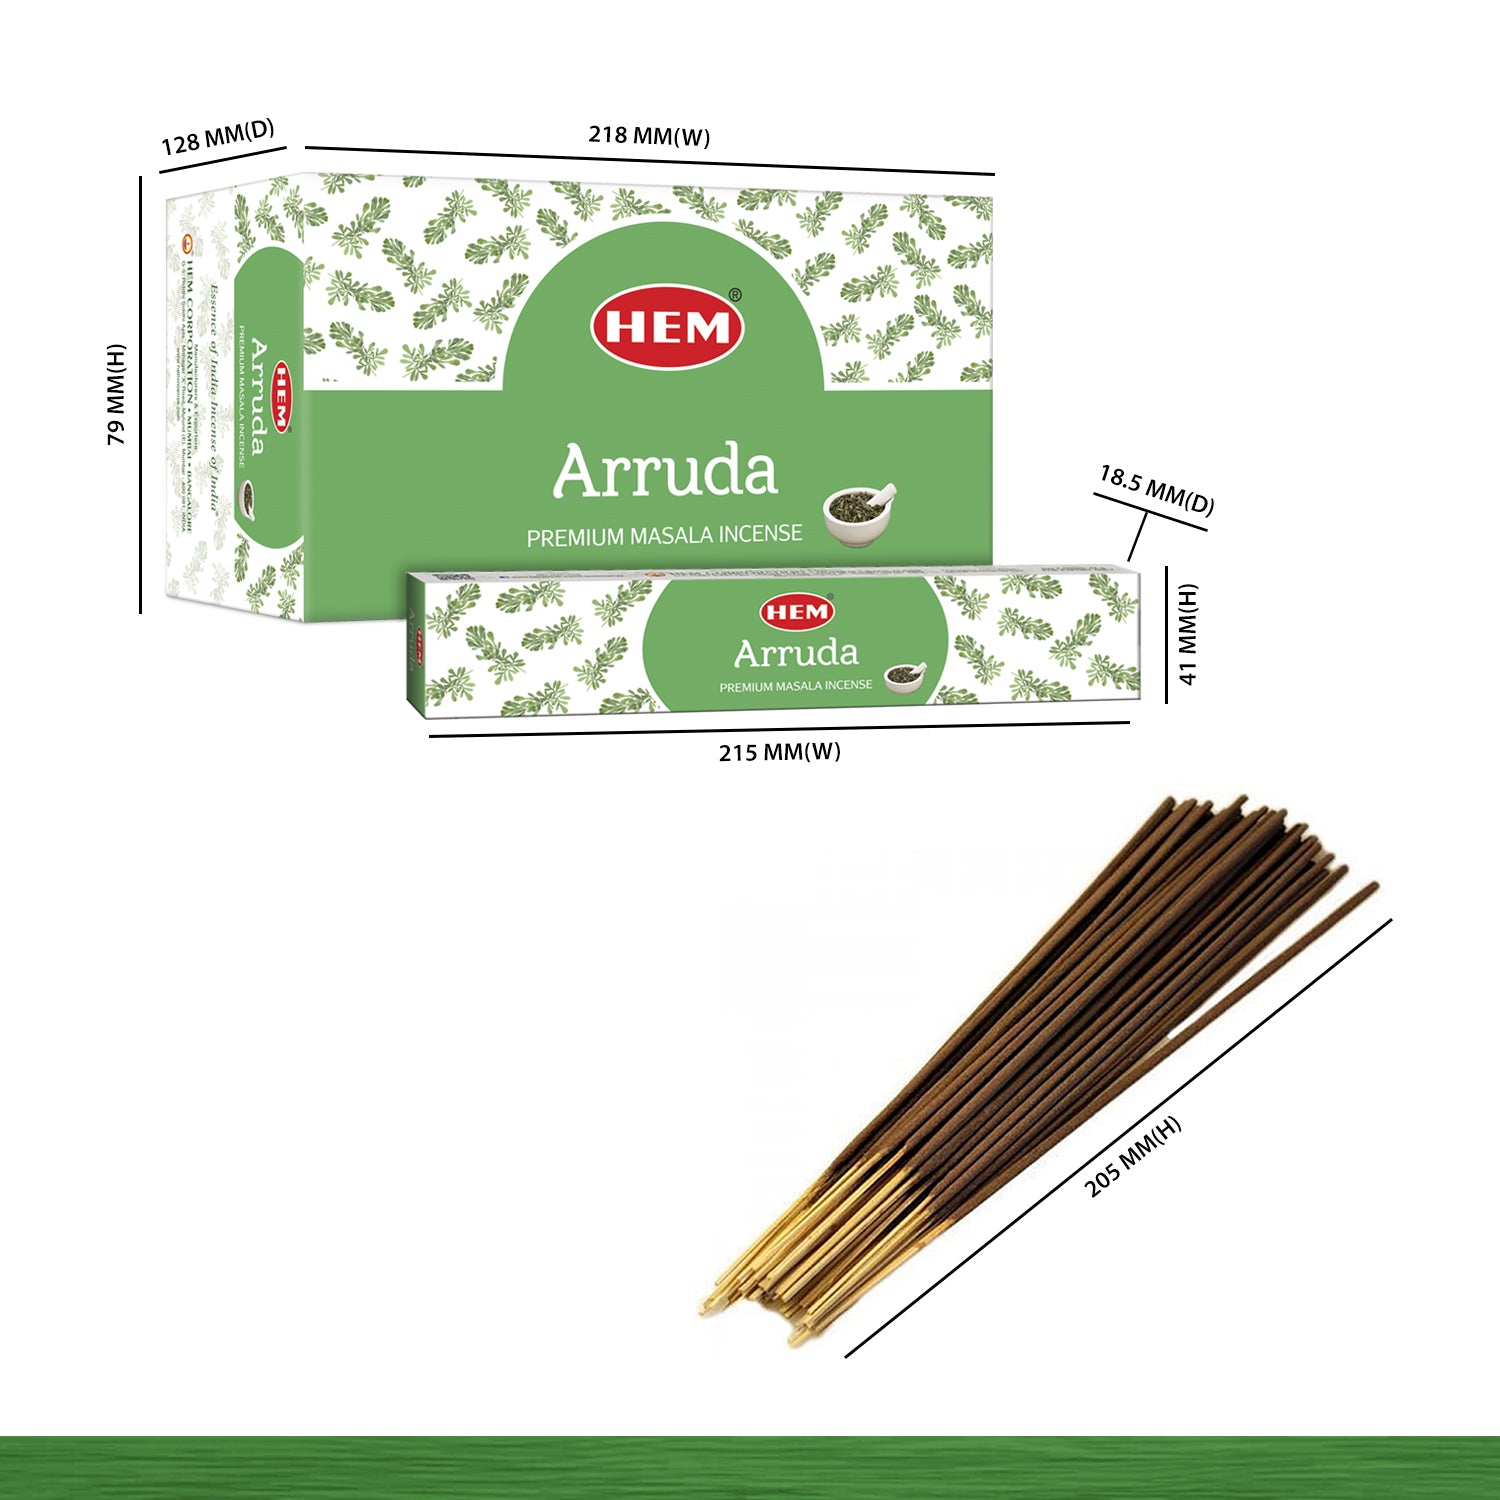 hem-arruda-premium-masala-incense-sticks-size